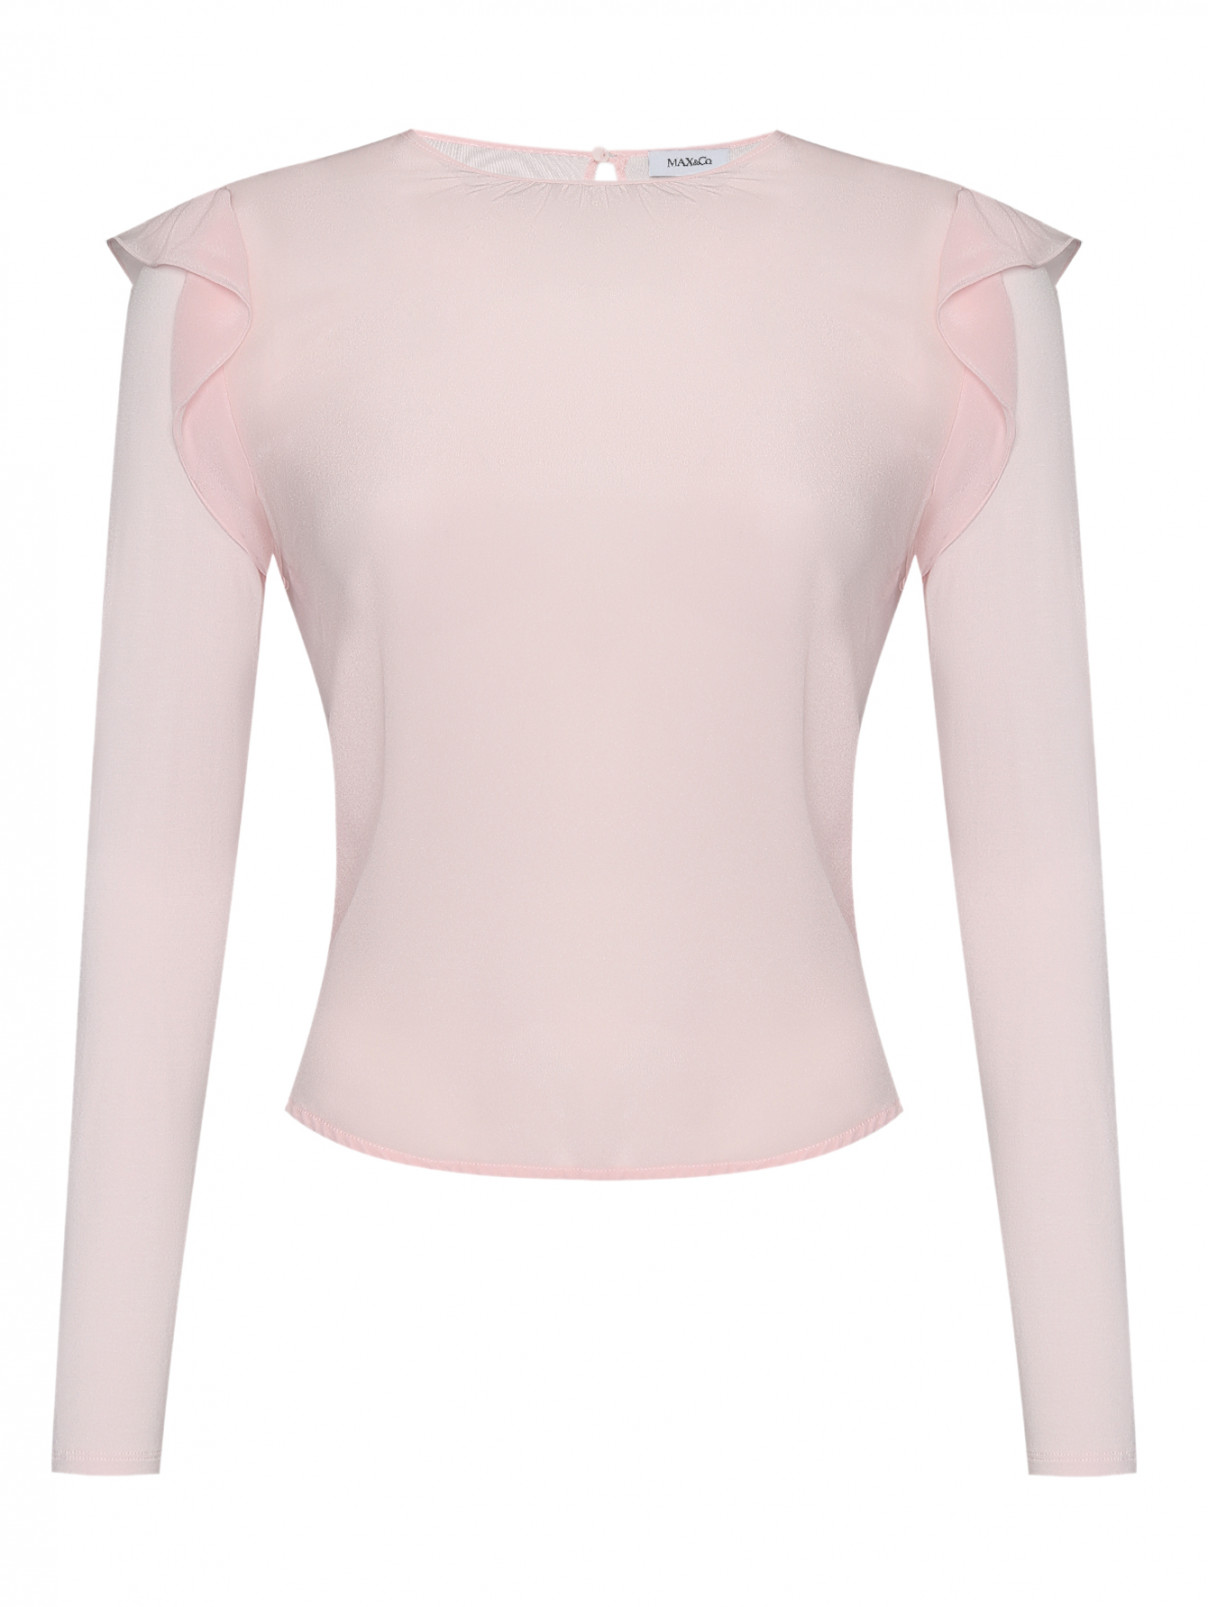 Блуза из вискозы с оборками Max&Co  –  Общий вид